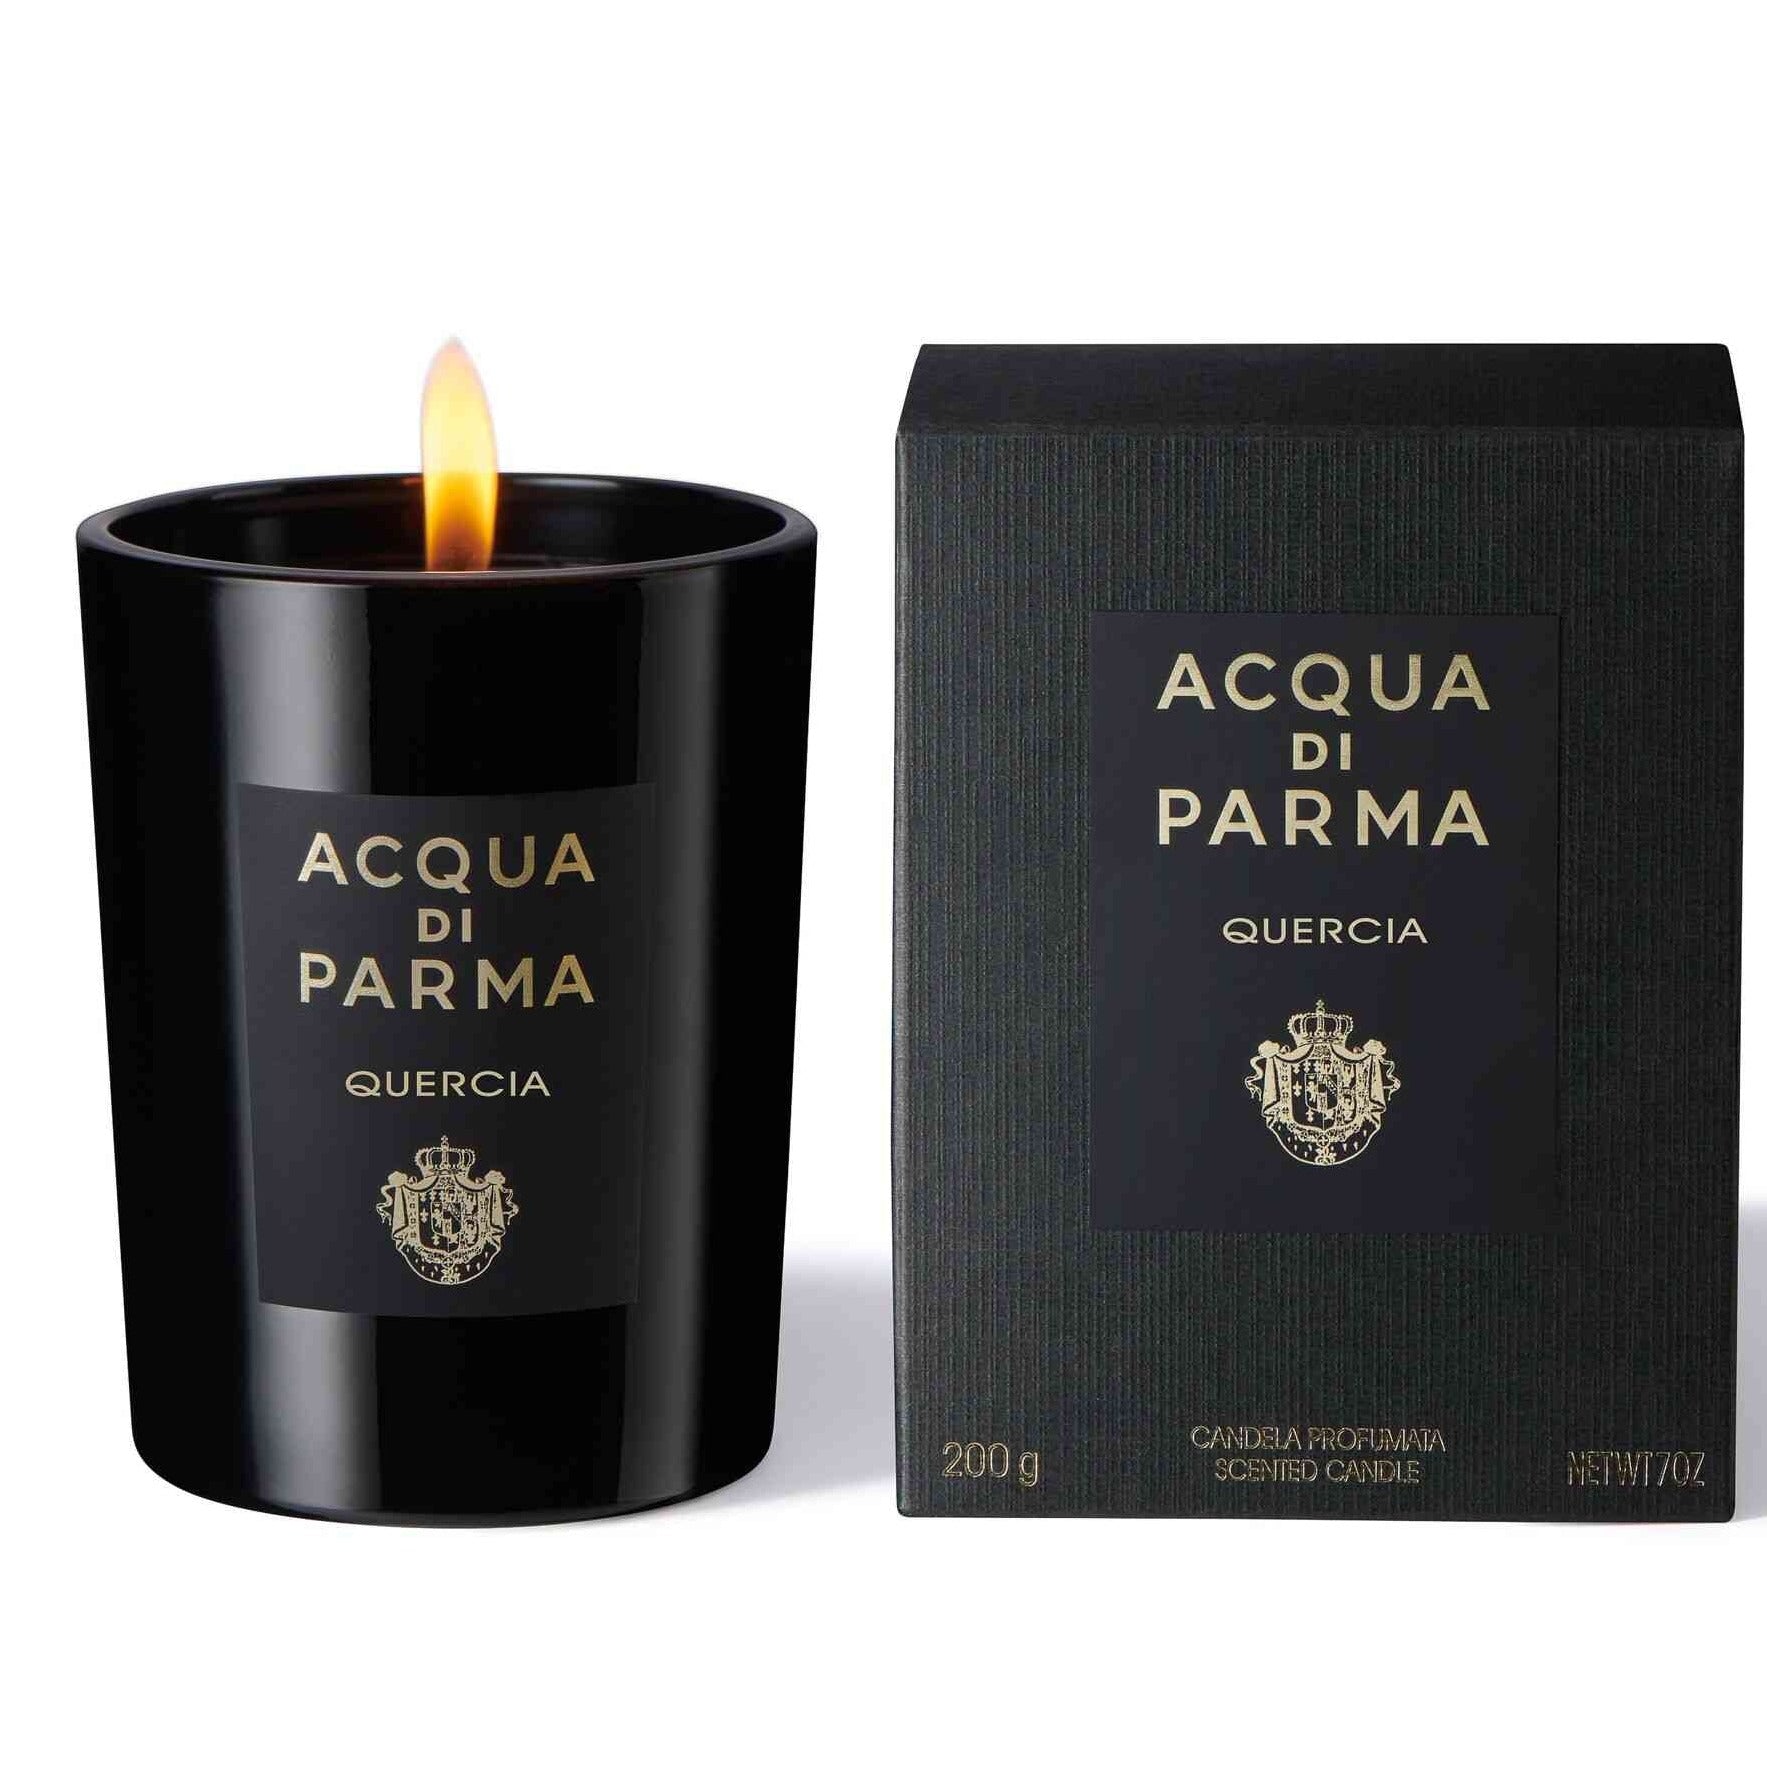 Acqua Di Parma Quercia Candle | My Perfume Shop Australia